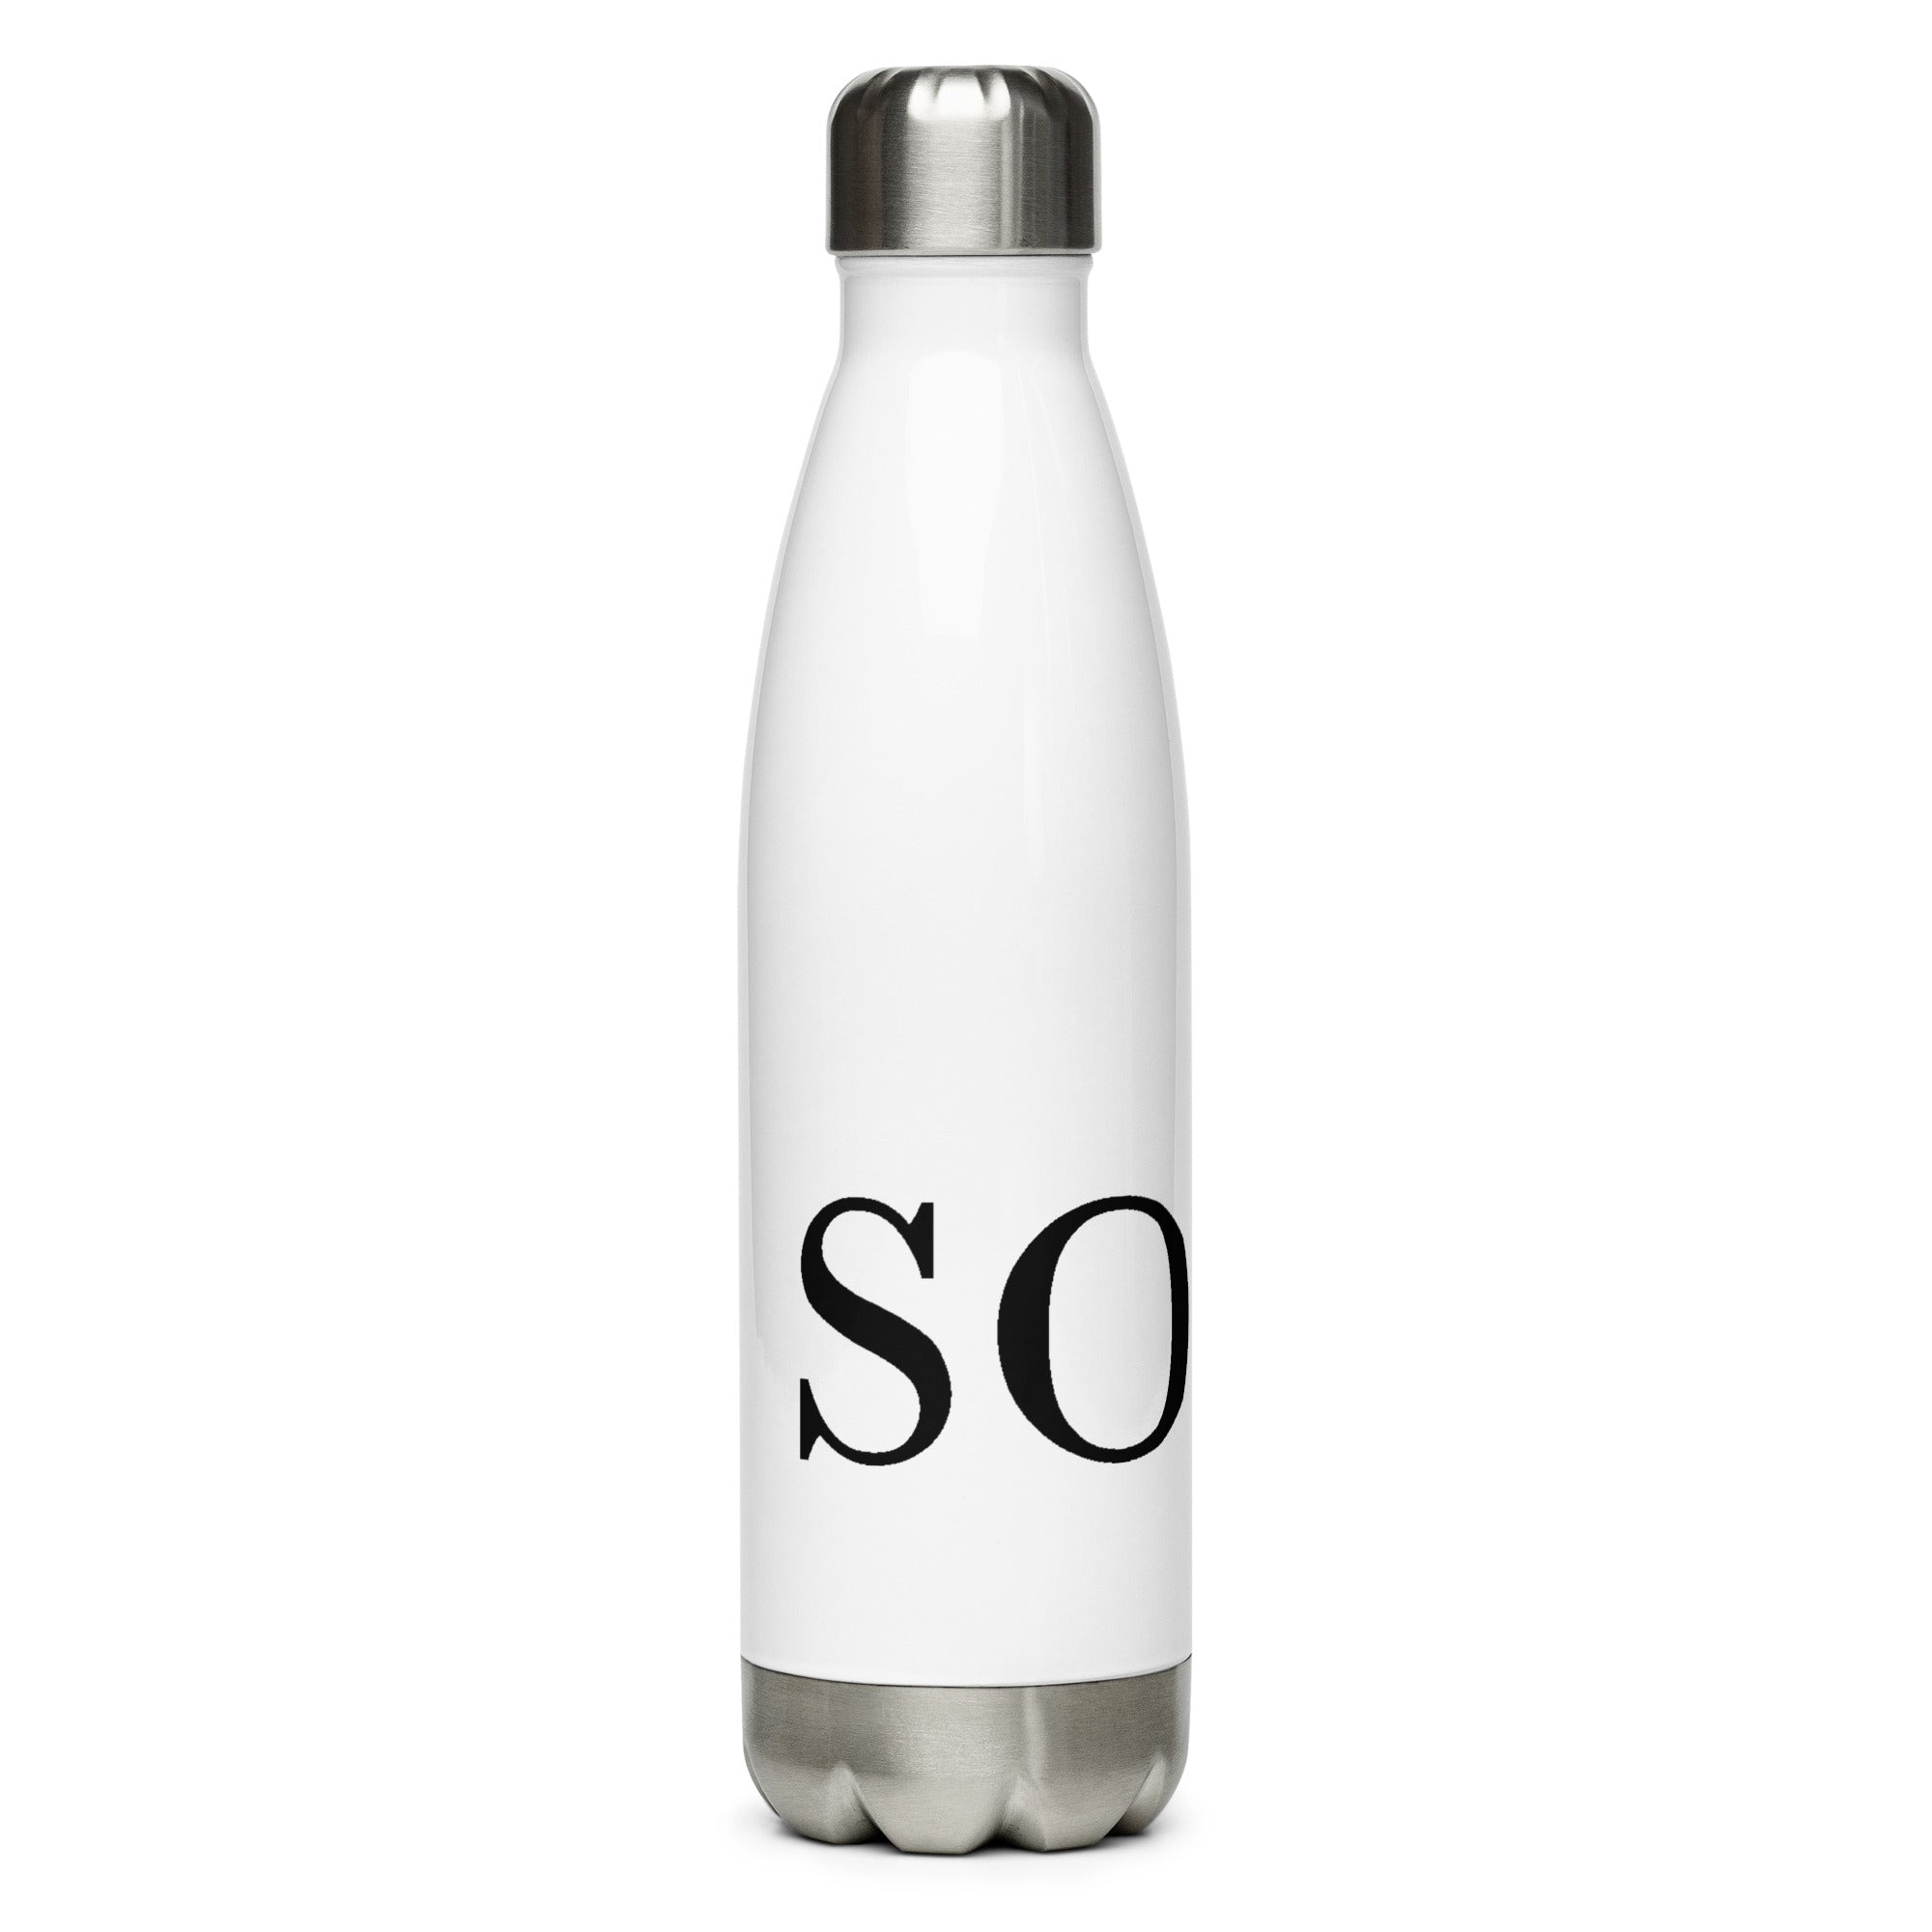 Stainless Steel Solo Water Bottle